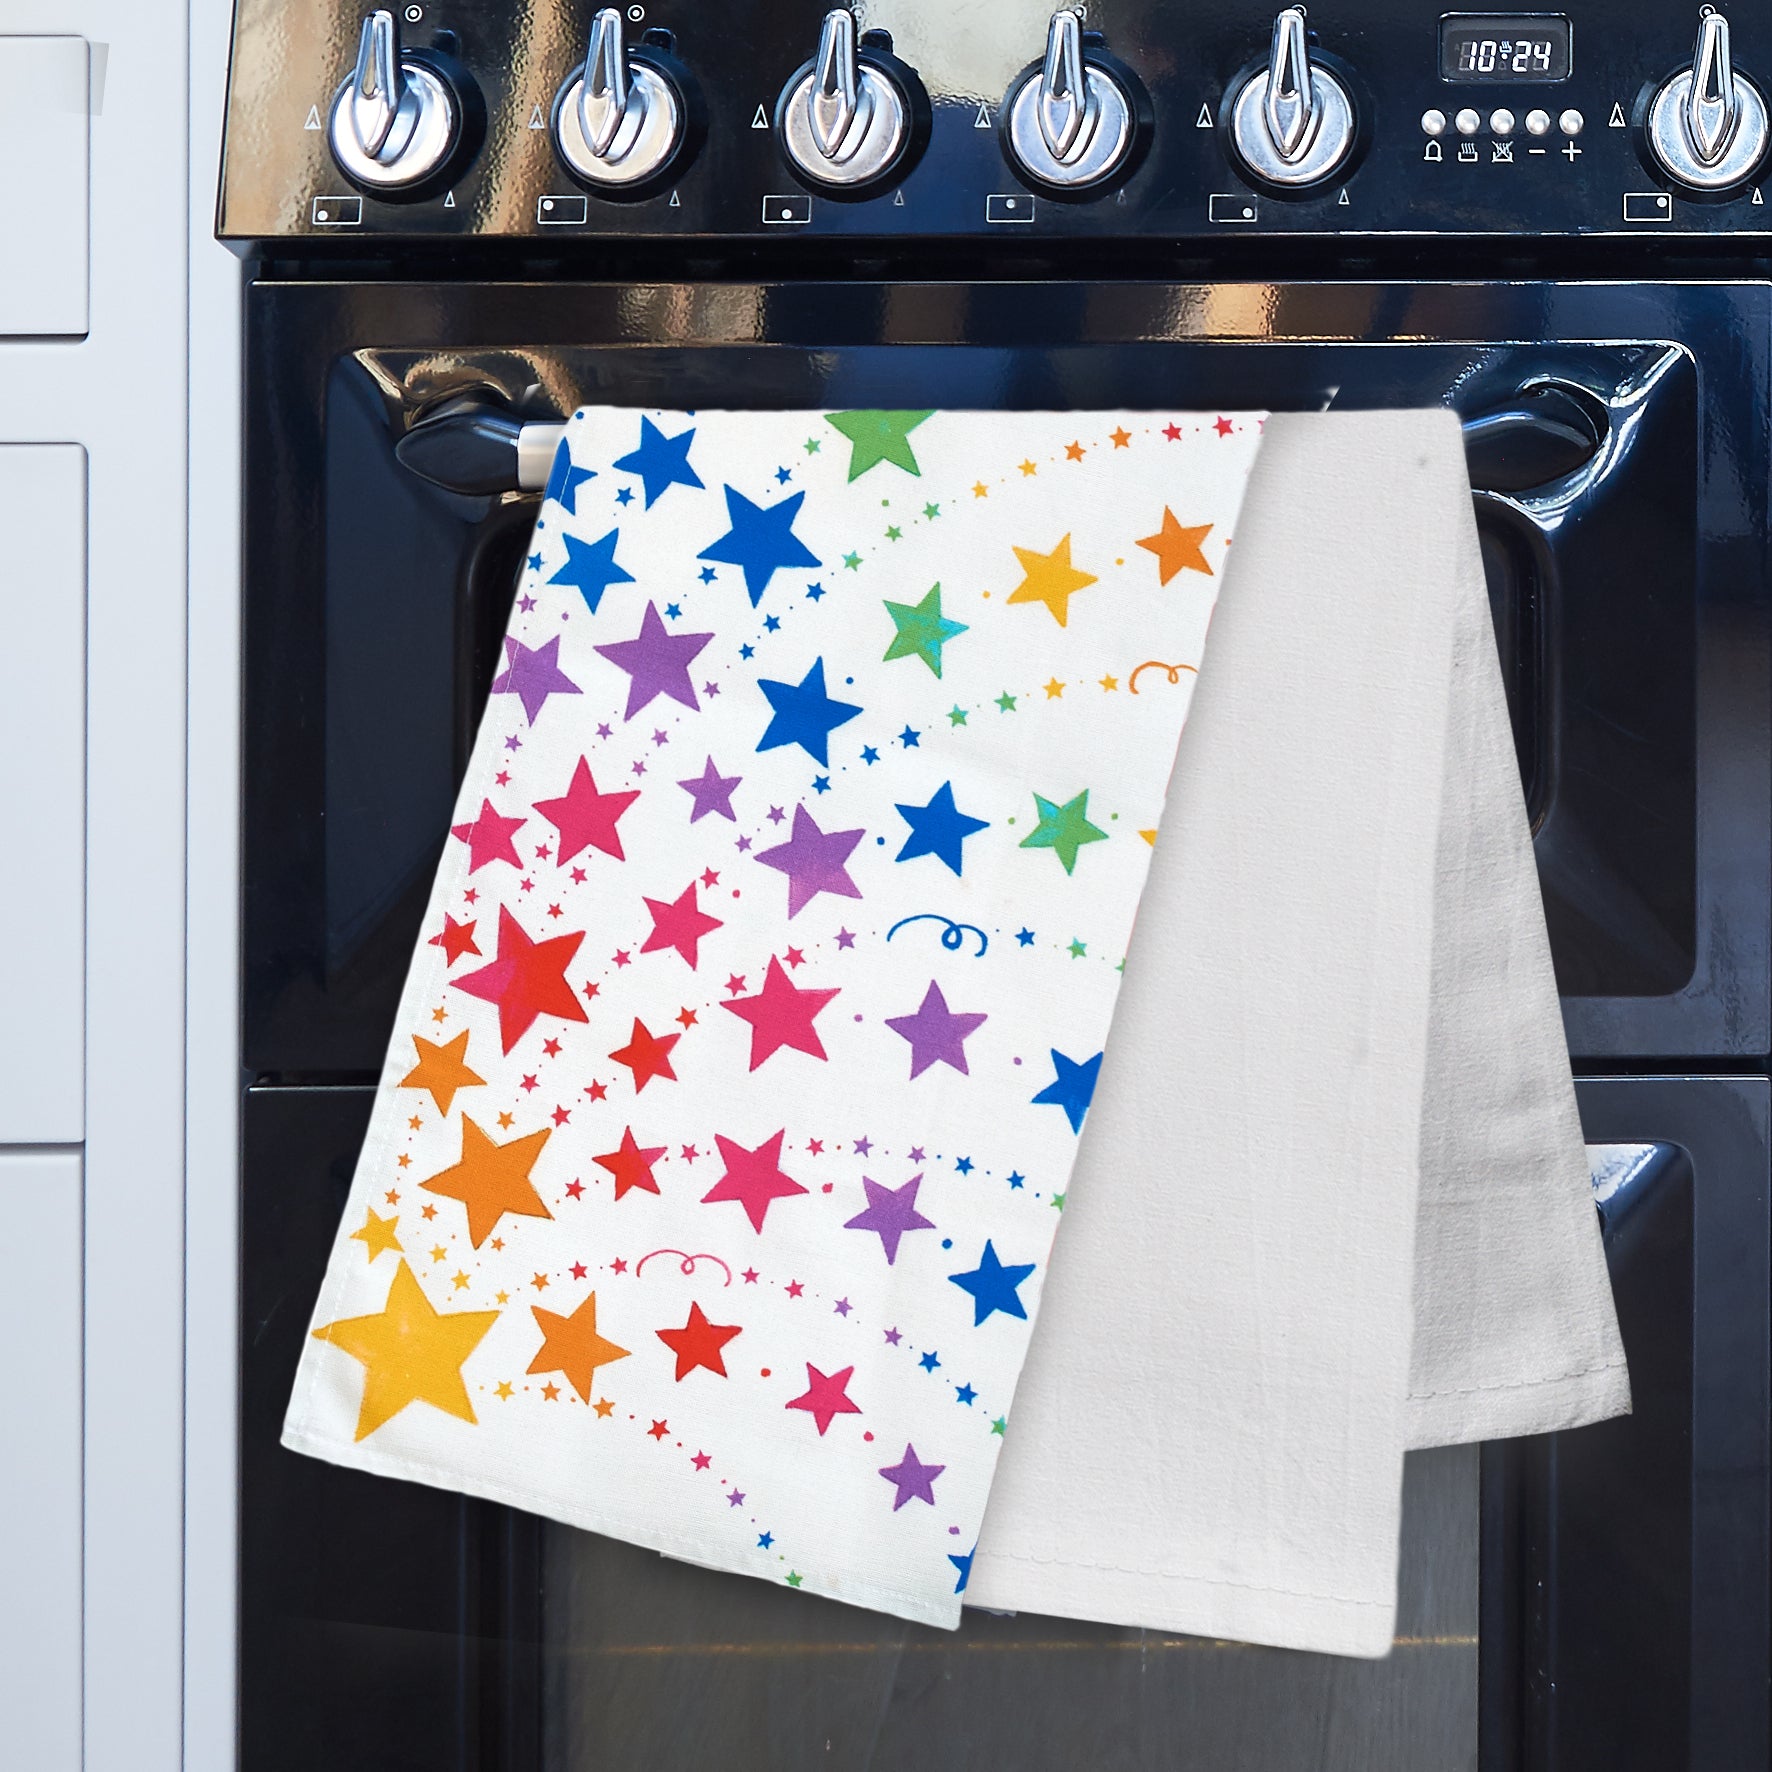 Rainbow stars tea towel and plain white tea towel on a range cooker